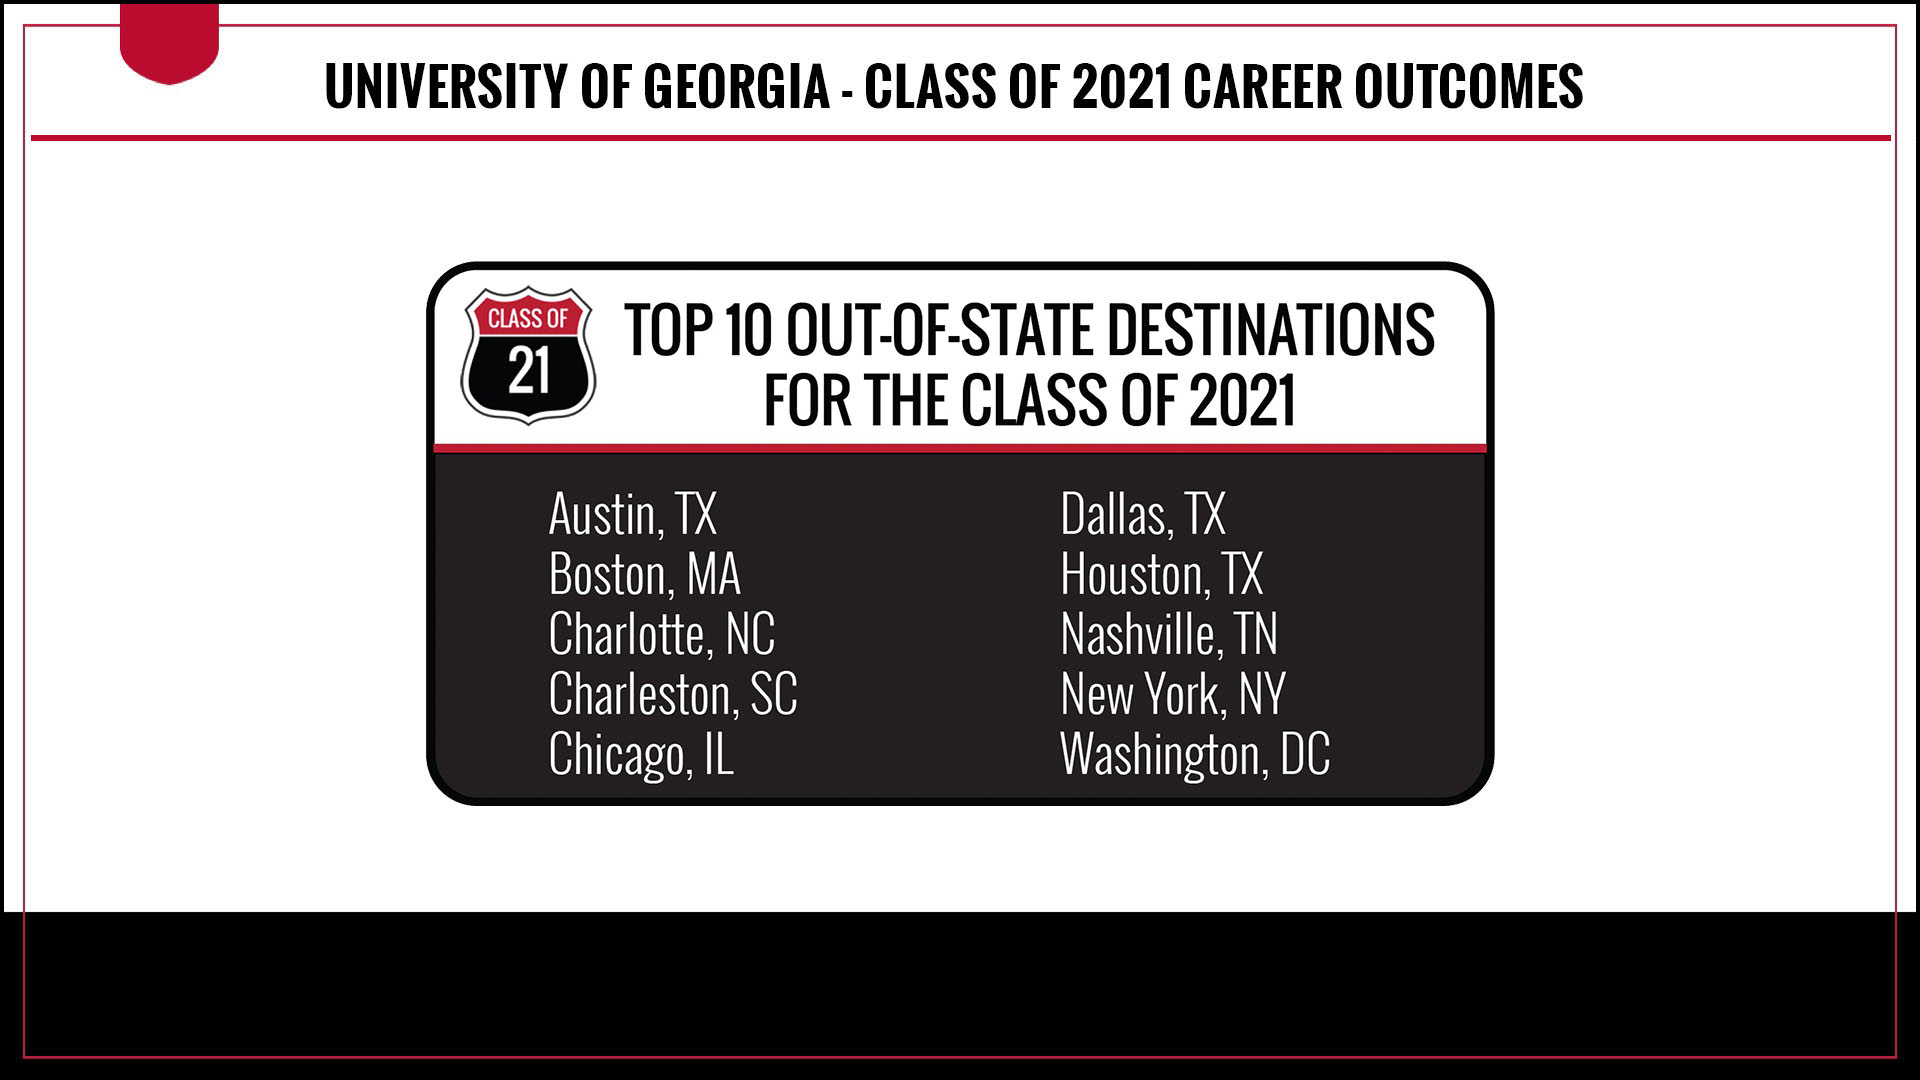 Top Out-of-State destinations for UGA Class of 2021 graduates include: Austin, TX - Boston, MA - Charlotte, NC - Charleston, SC - Chicago, IL - Dallas, TX - Houston, TX - Nashville, TN - New York, NY - Washington, DC